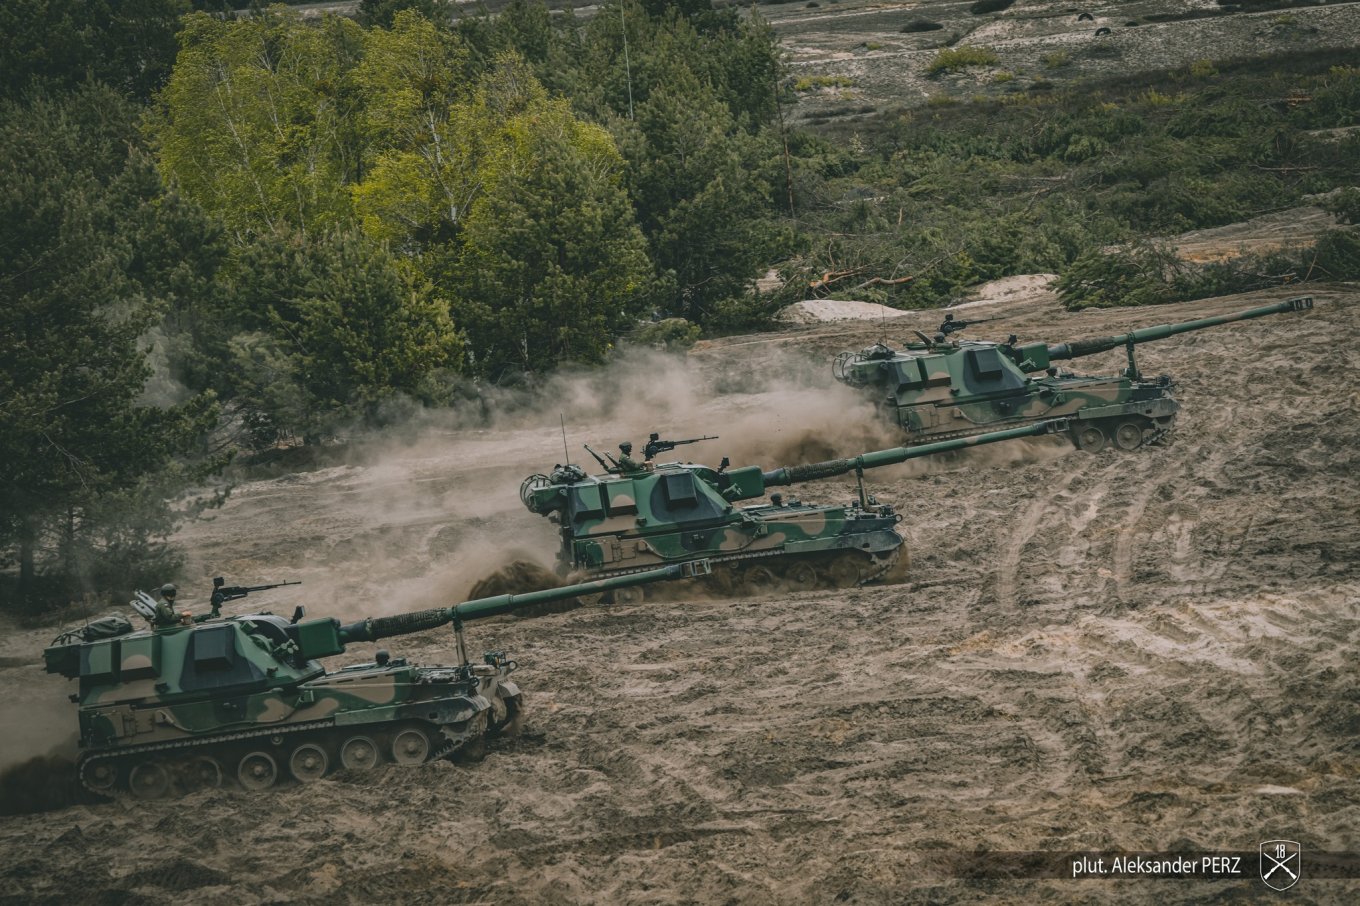 Polish Krab selfpropelled artillery systems